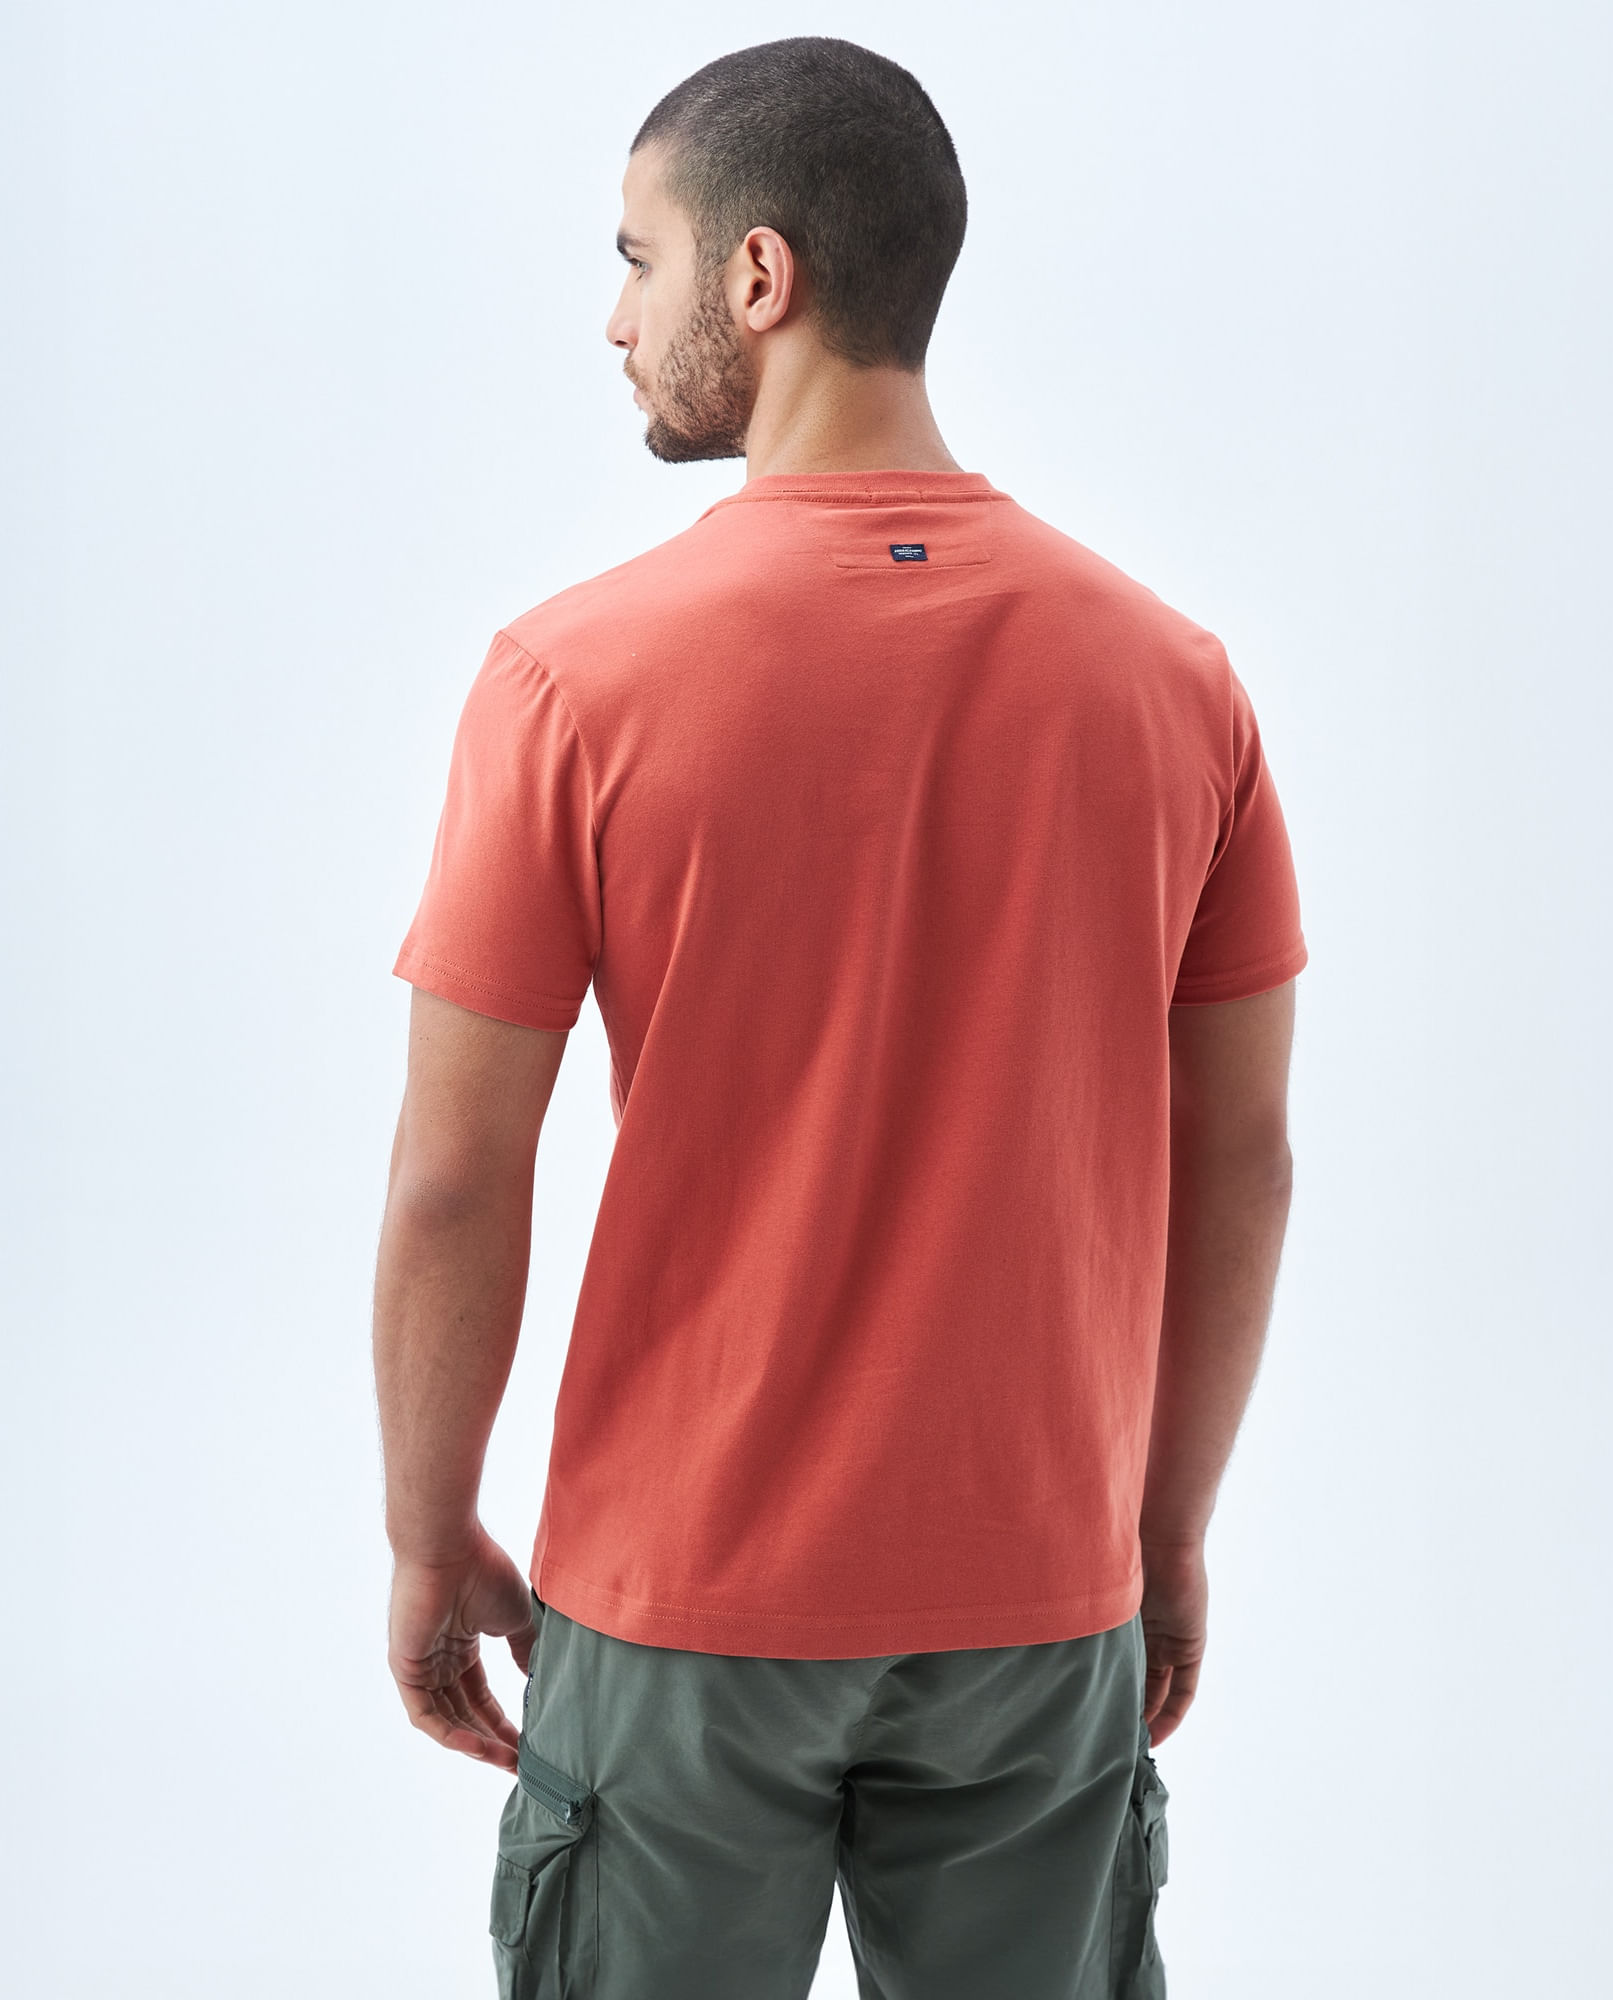 Camiseta térmica cuello redondo Hombre - New Athlon - 4nomads Perú